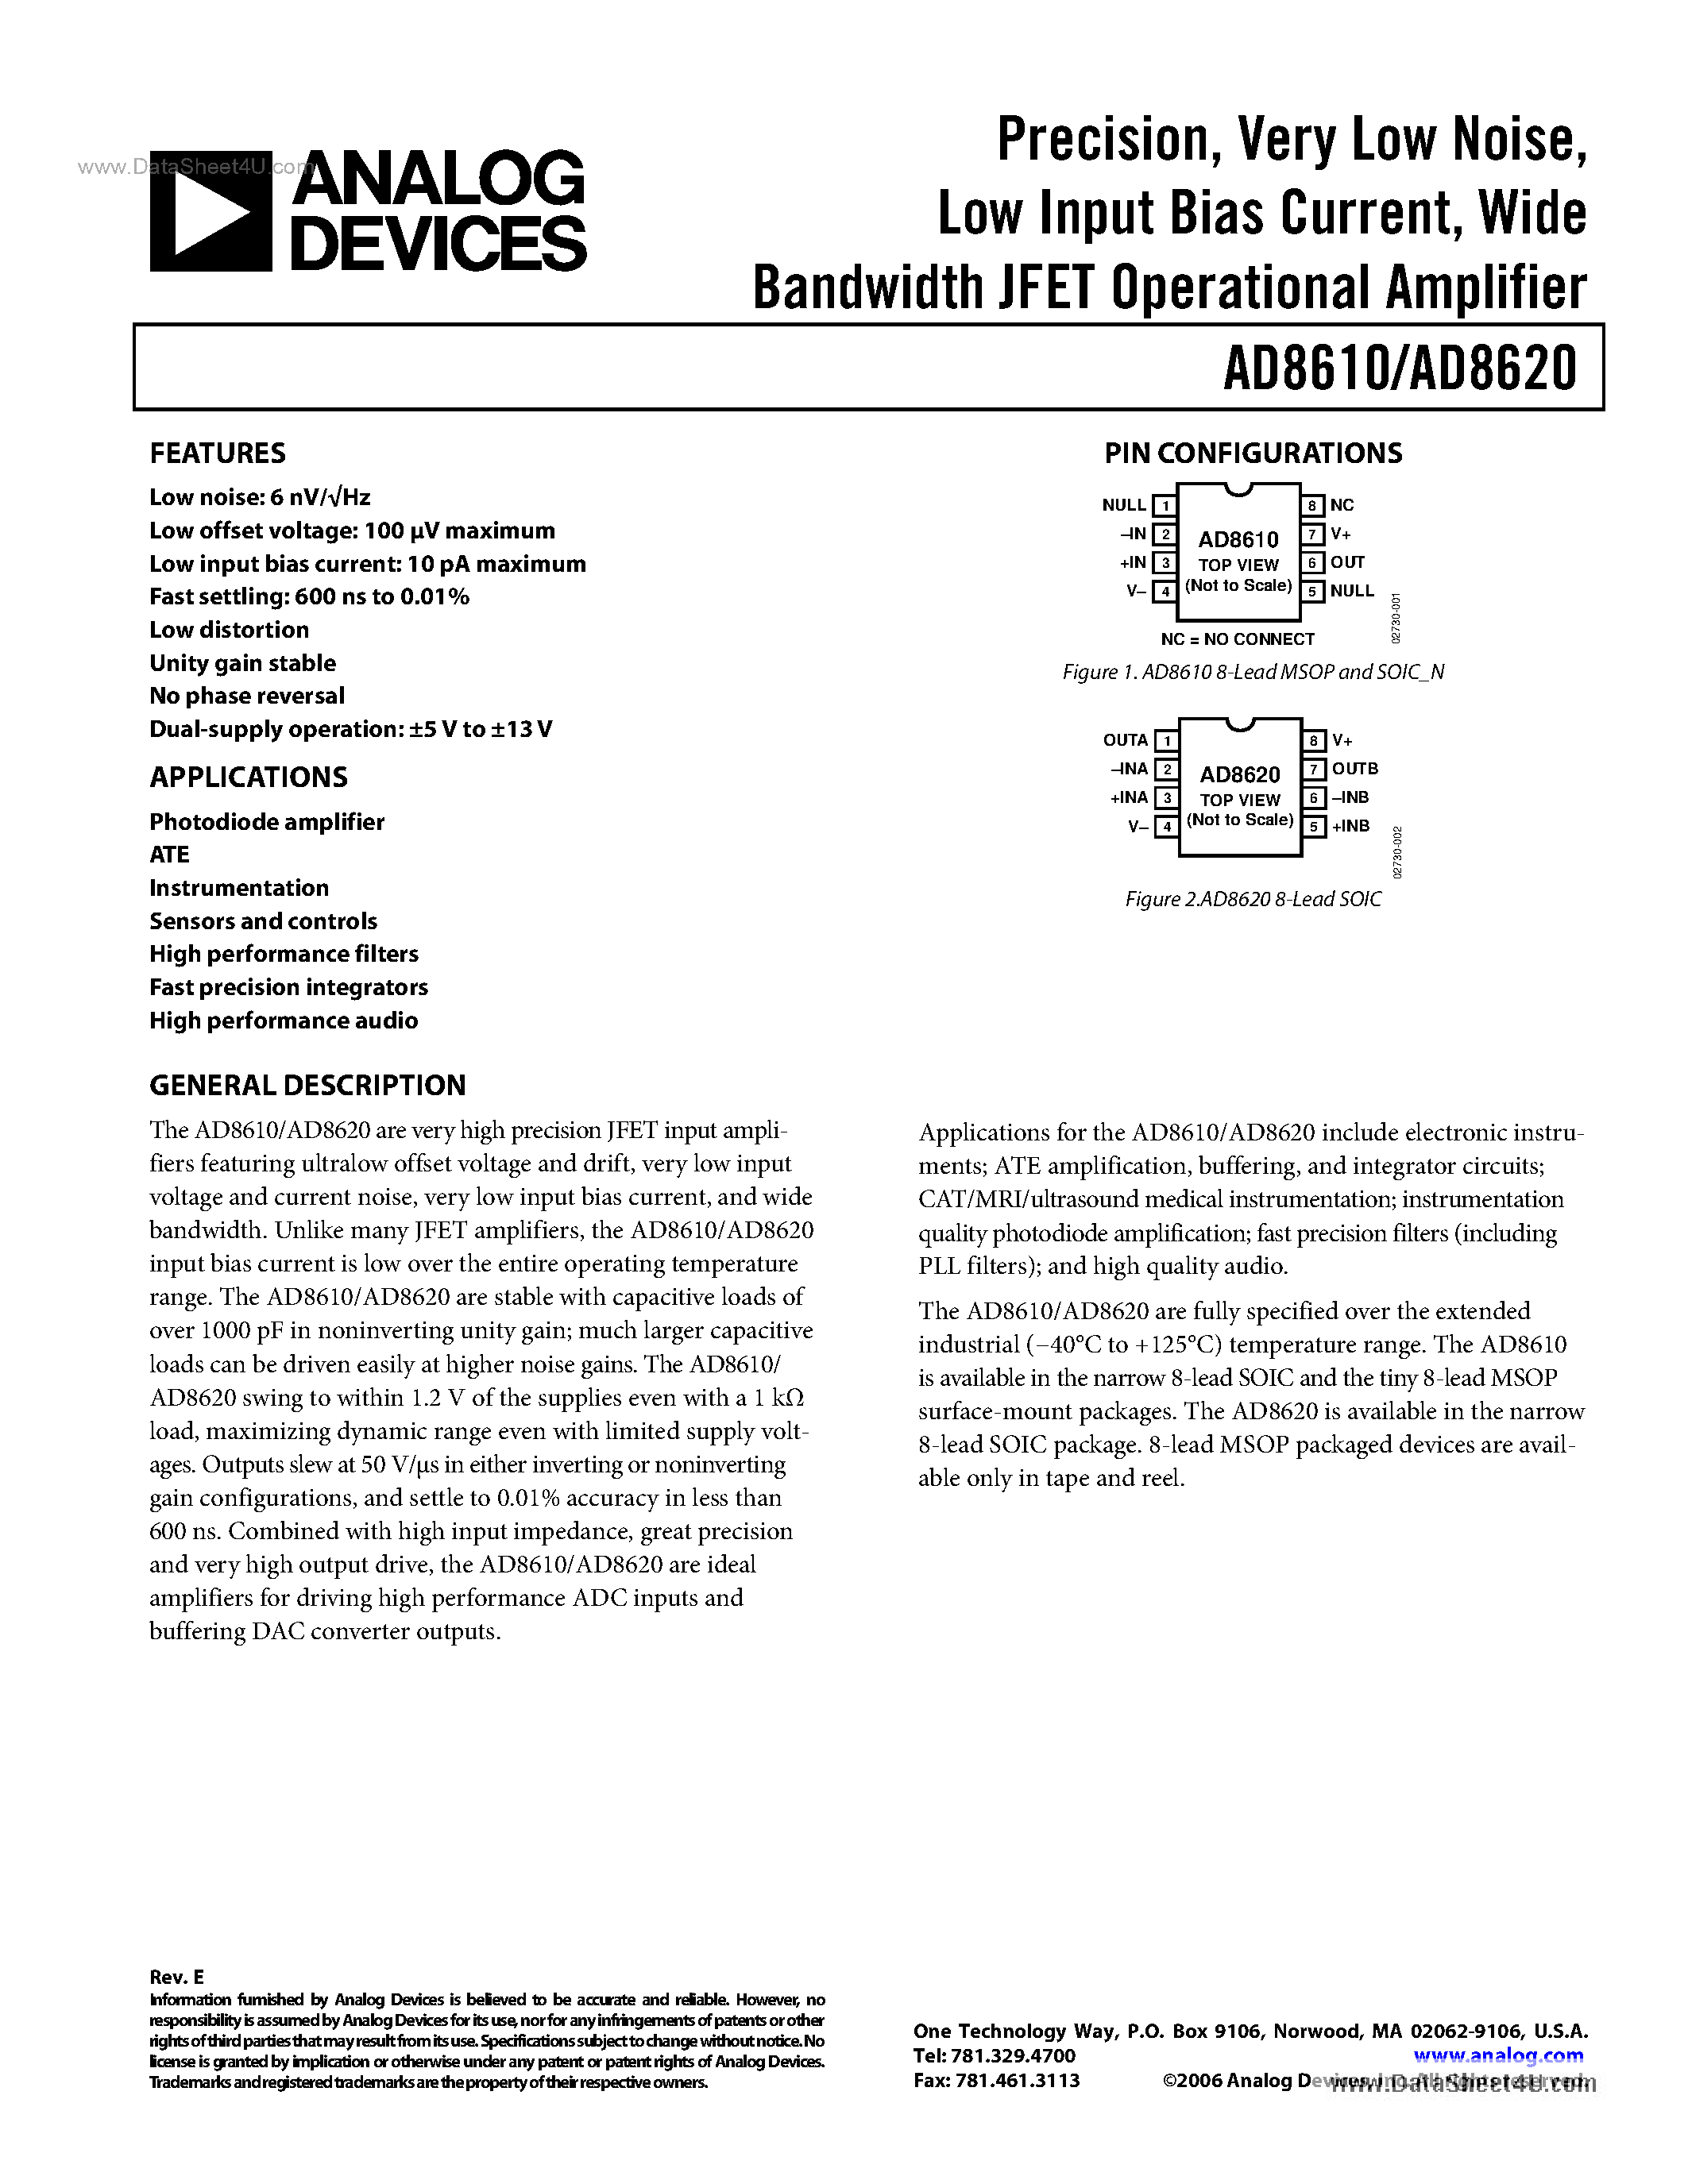 Даташит AD8610 - (AD8610 / AD8620) Wide Bandwidth JFET Operational Amplifier страница 1